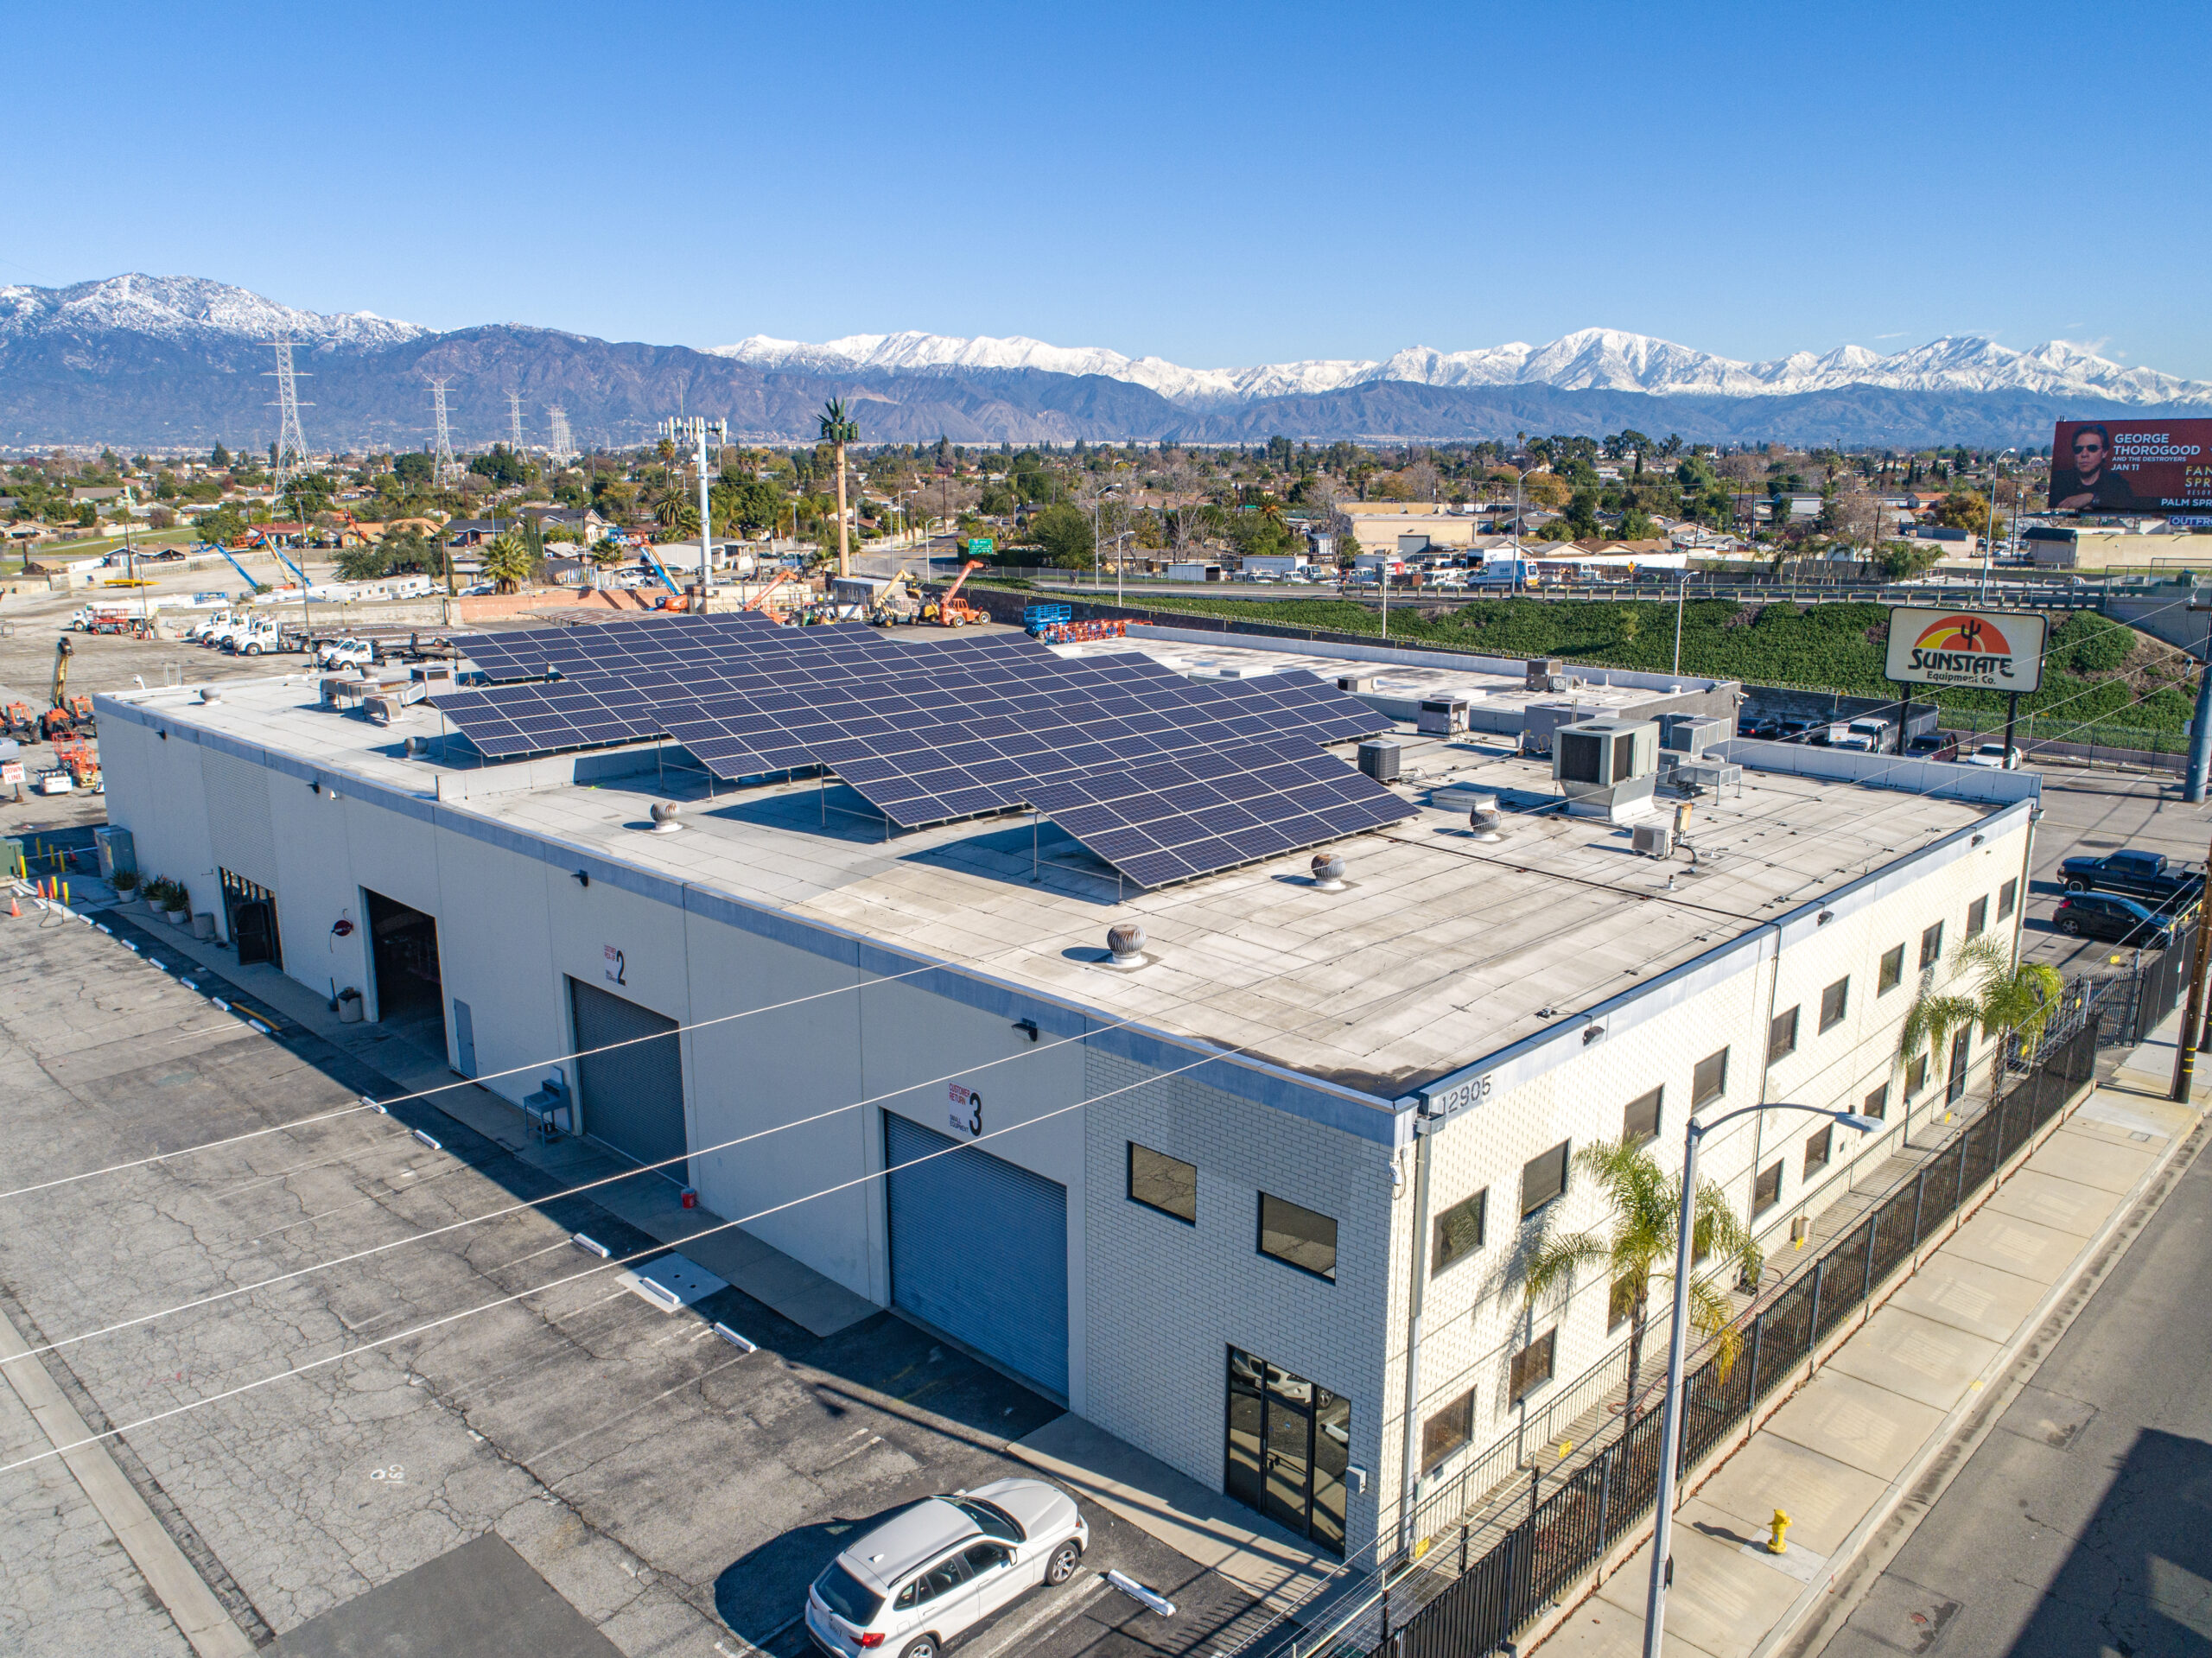 Rooftop solar arrays